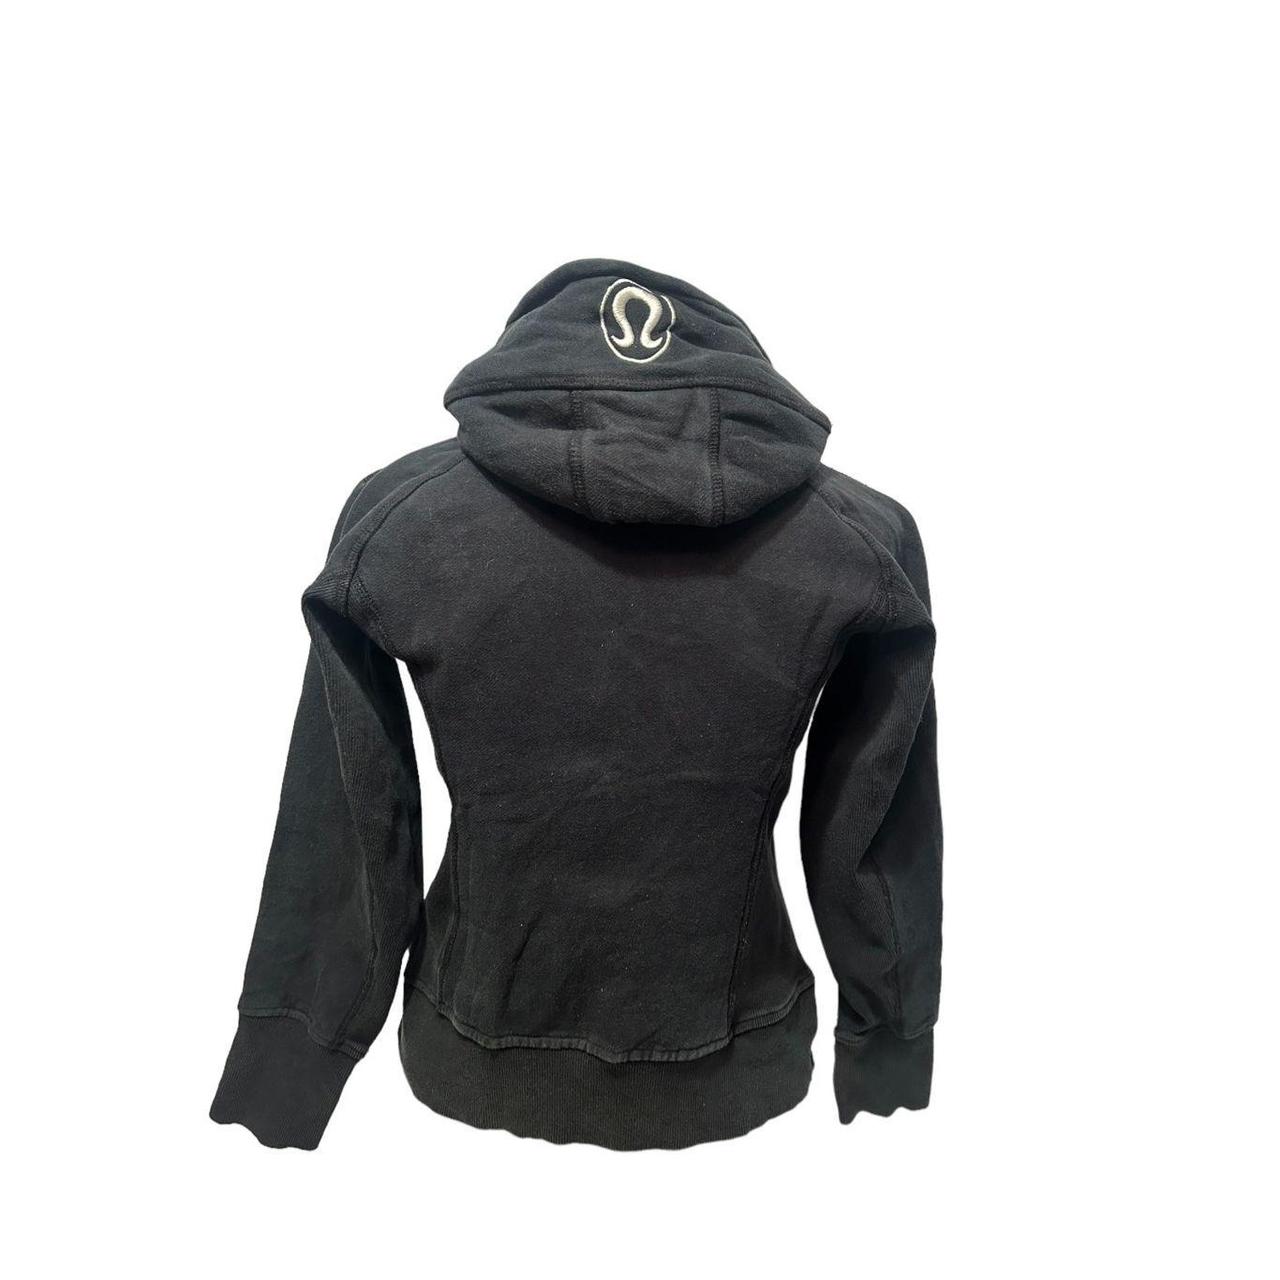 Lululemon scuba sweatshirt activewear - black size 6